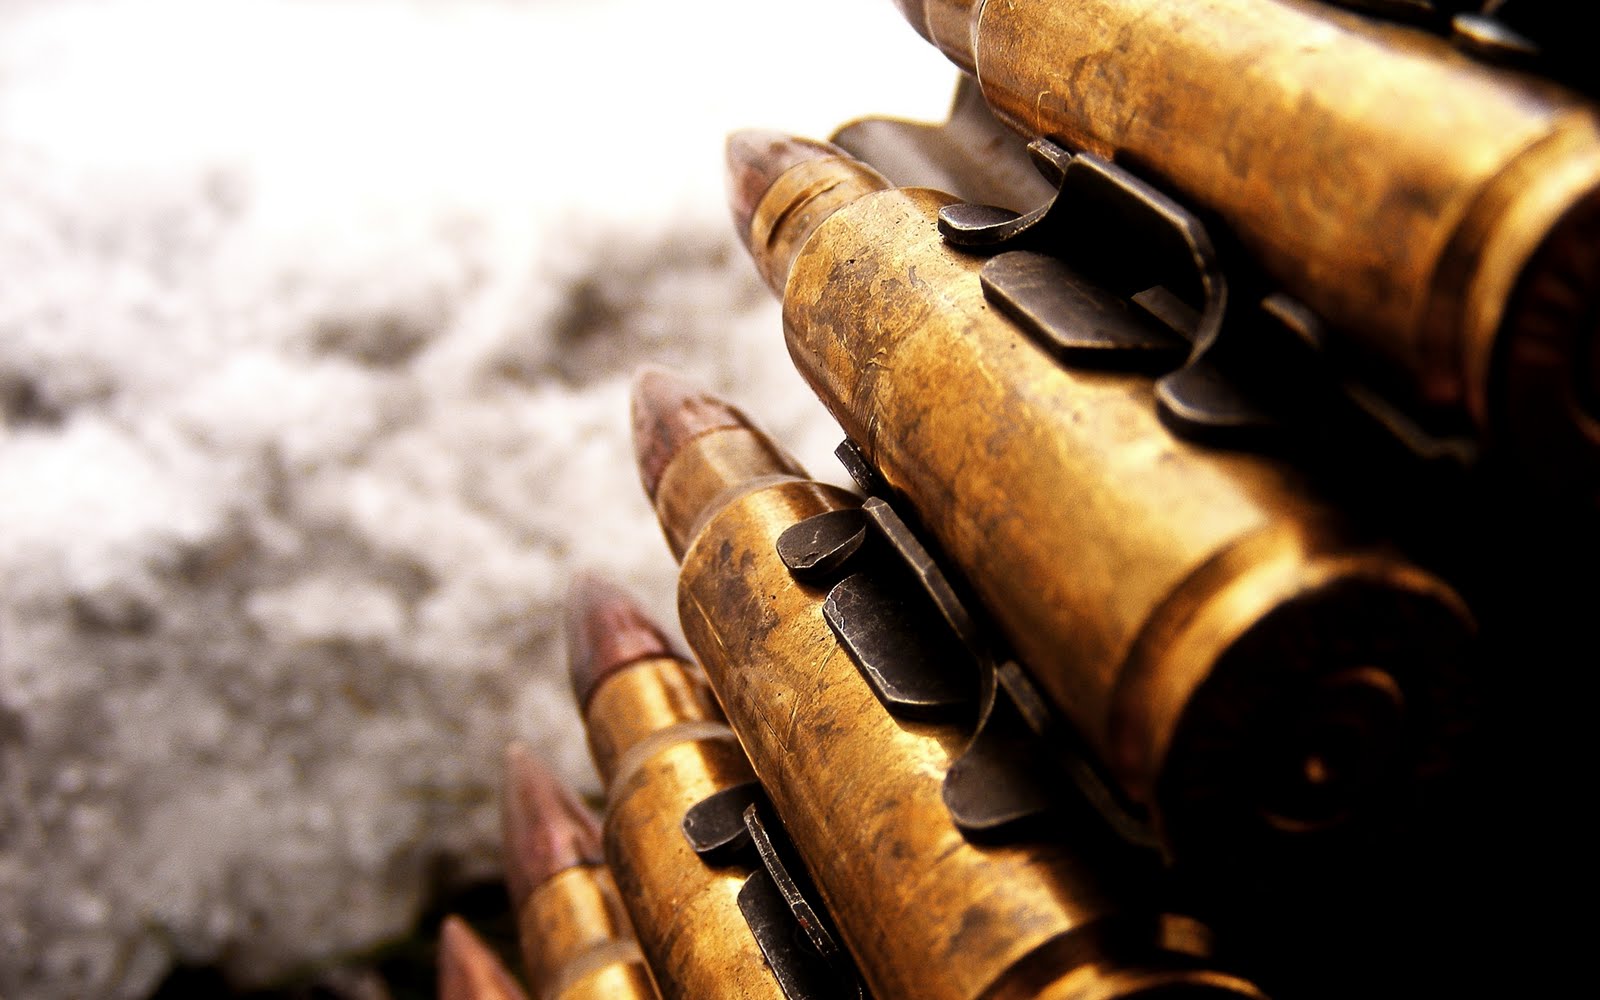 bullet hd wallpaper,ammunition,bullet,gun accessory,tobacco products,ammunition belt